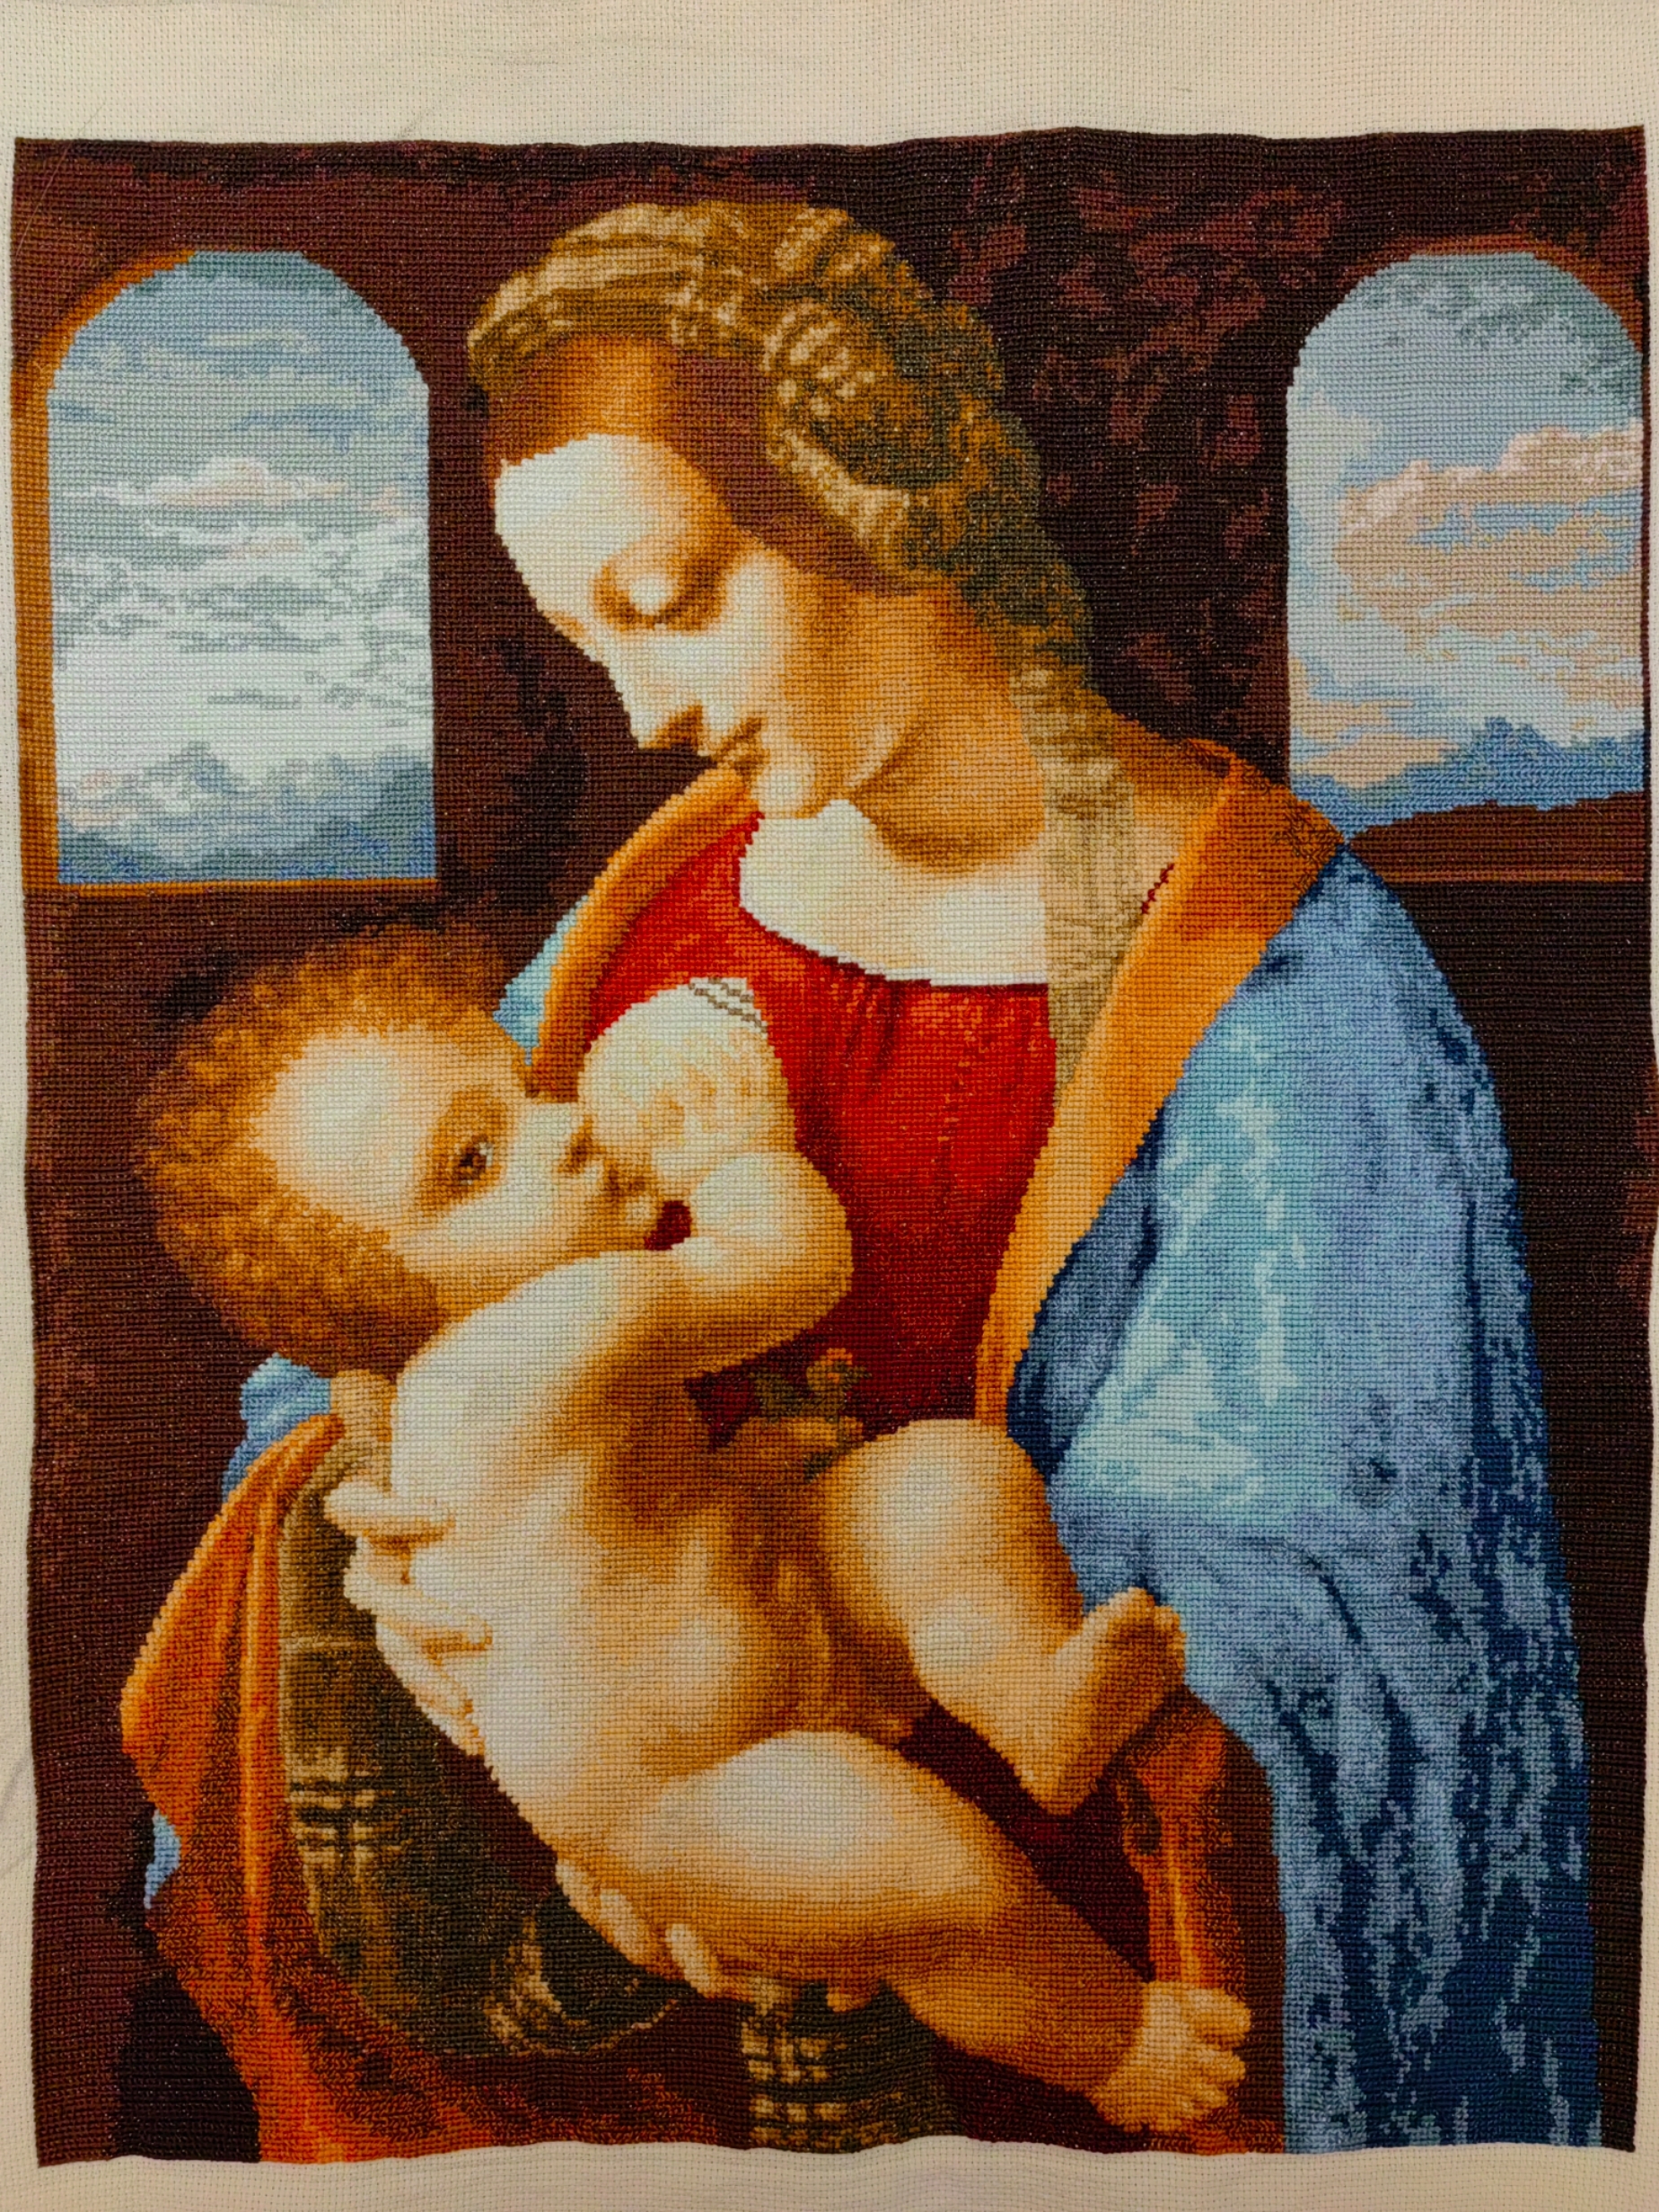 Автор картины мадонна с младенцем. Мадонна Литта. Мадонна Литта Леонардо. Литта Мадонна с младенцем Леонардо да Винчи. Картина Мадонна Литта Леонардо да Винчи.